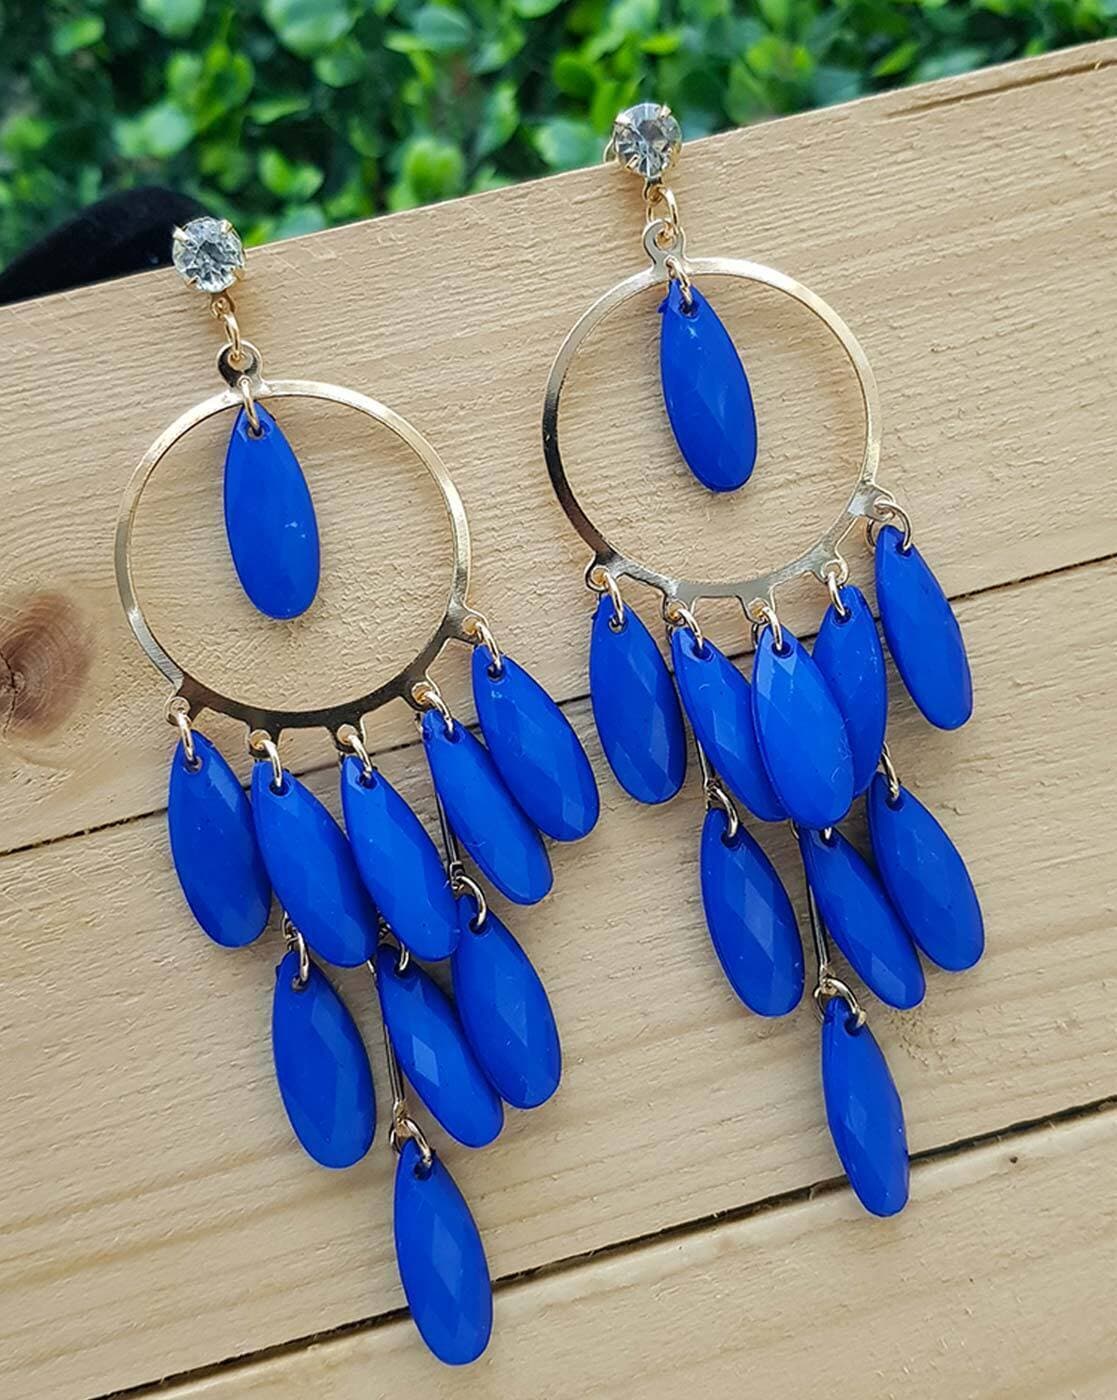 Buy Blue Handcrafted Drop Earrings Online - W for Woman